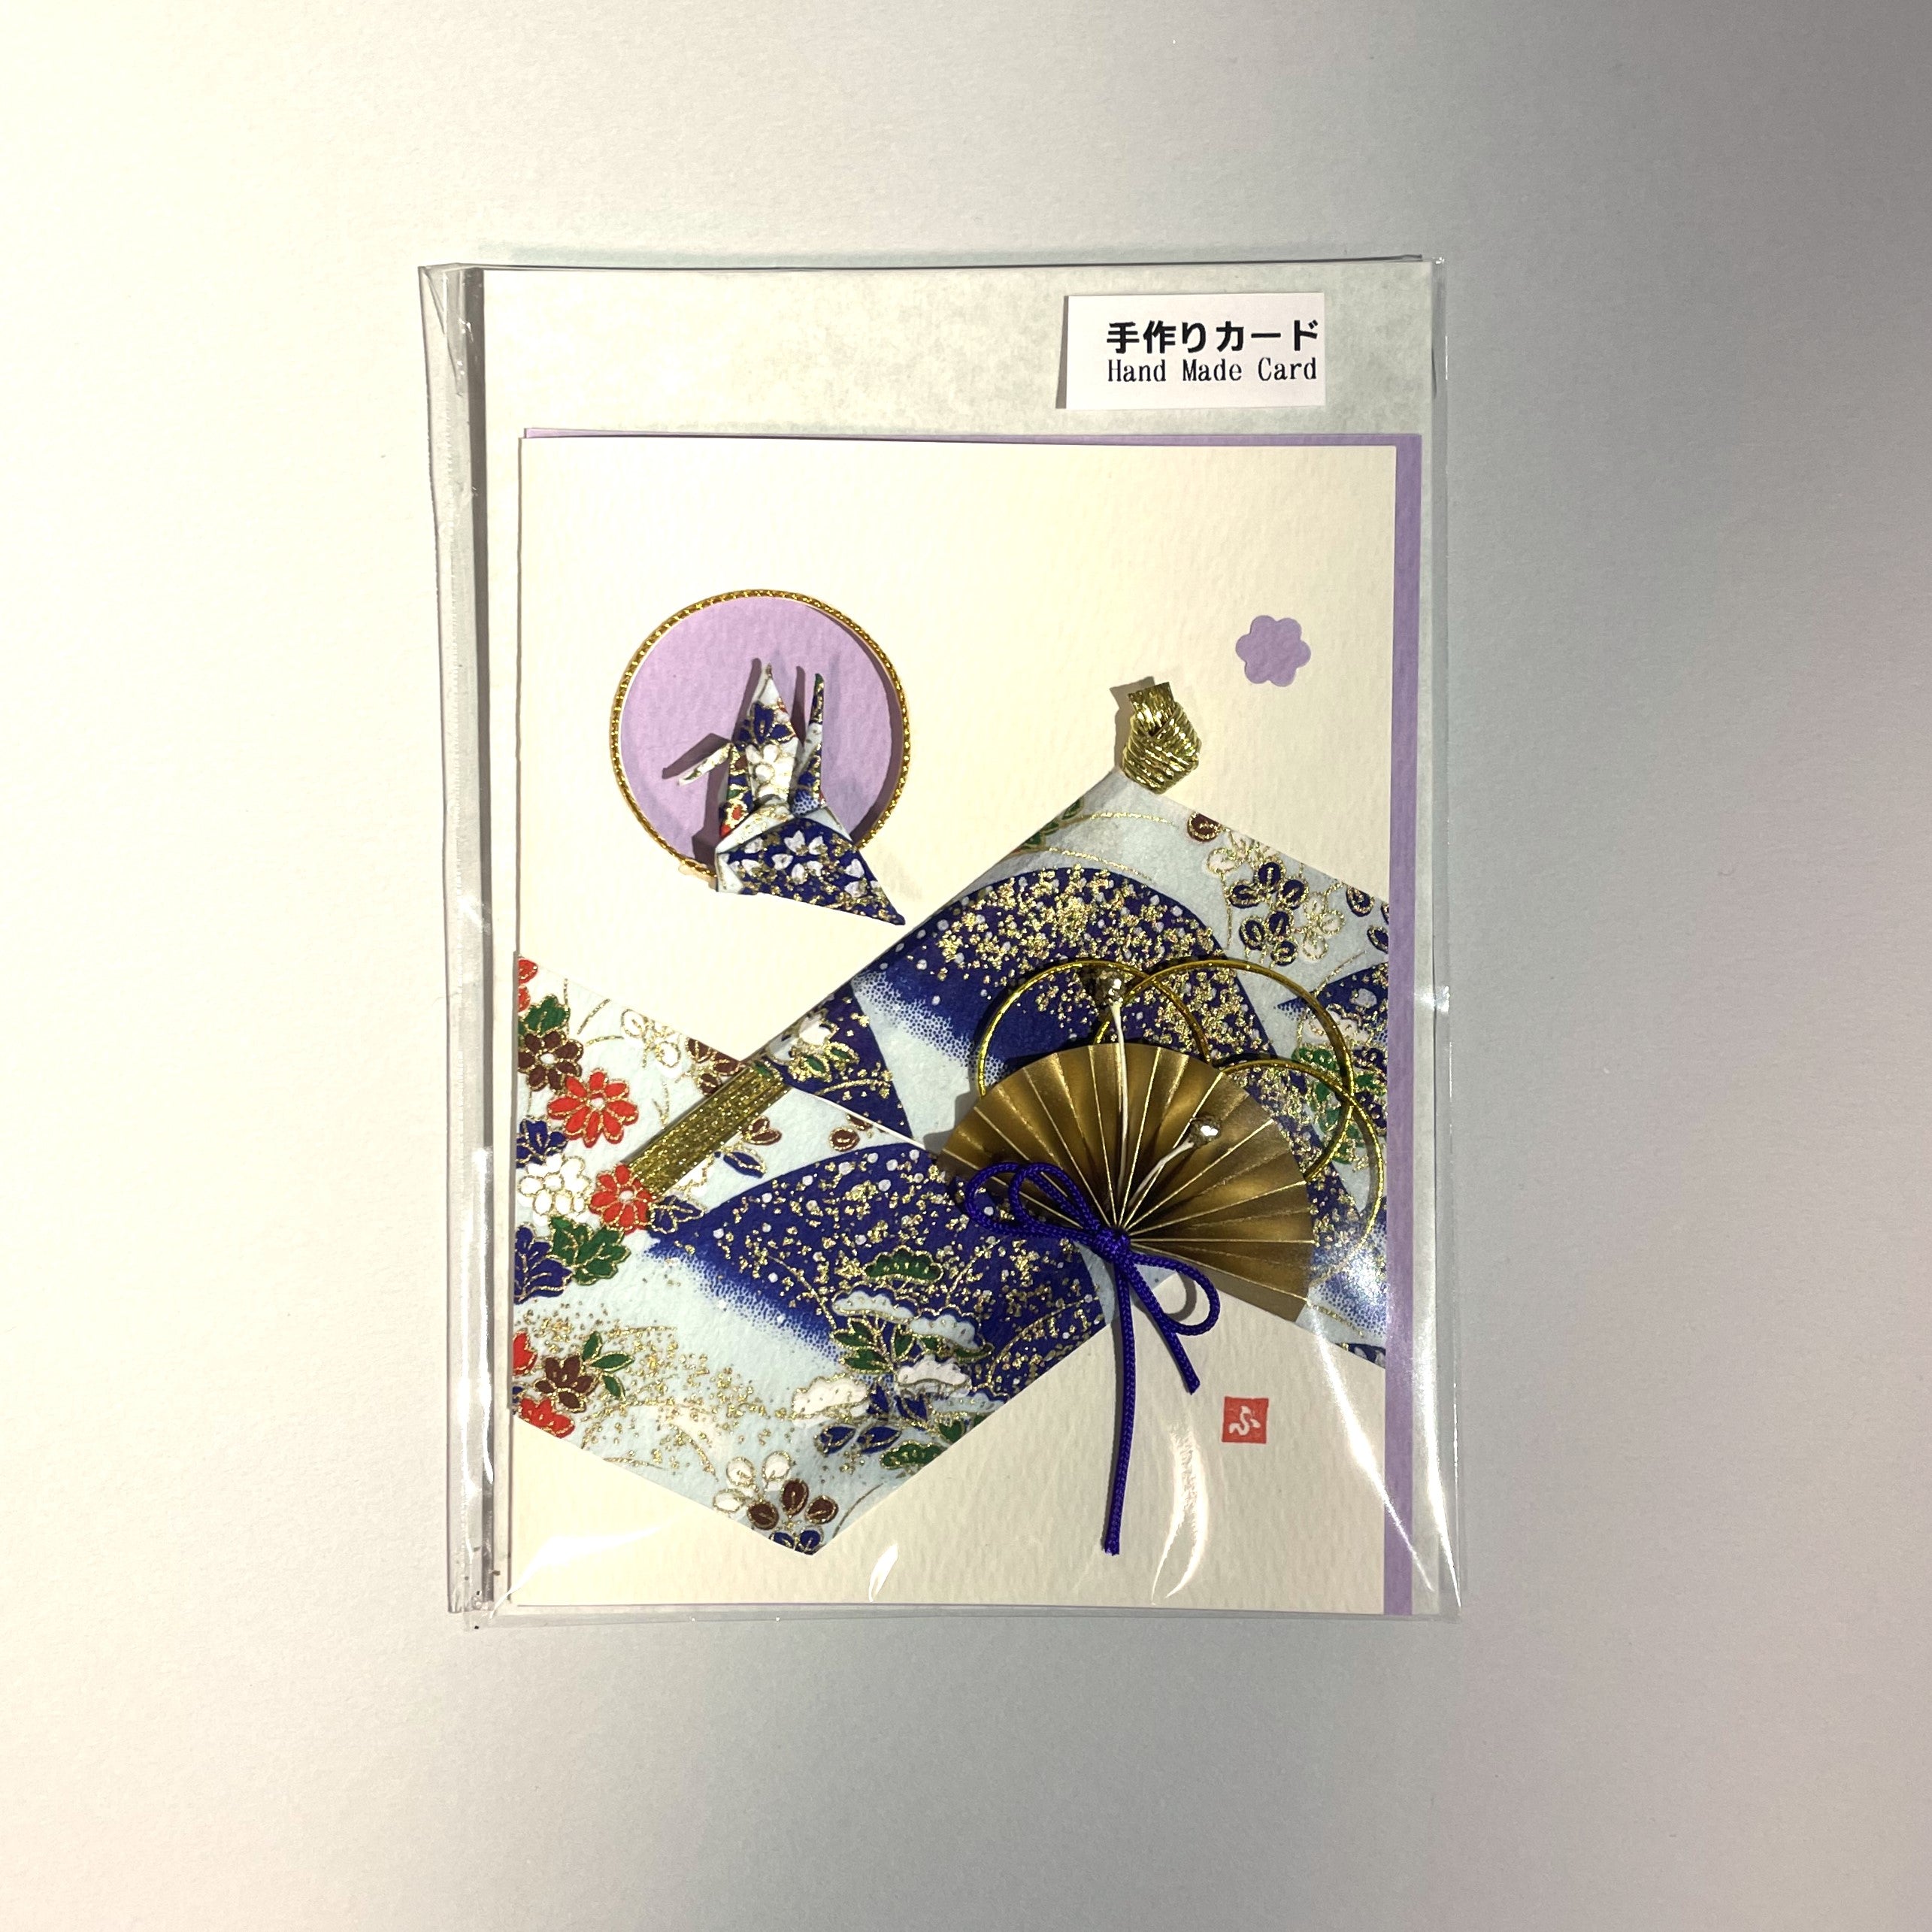 Handmade Greeting Card "Blue Crane"